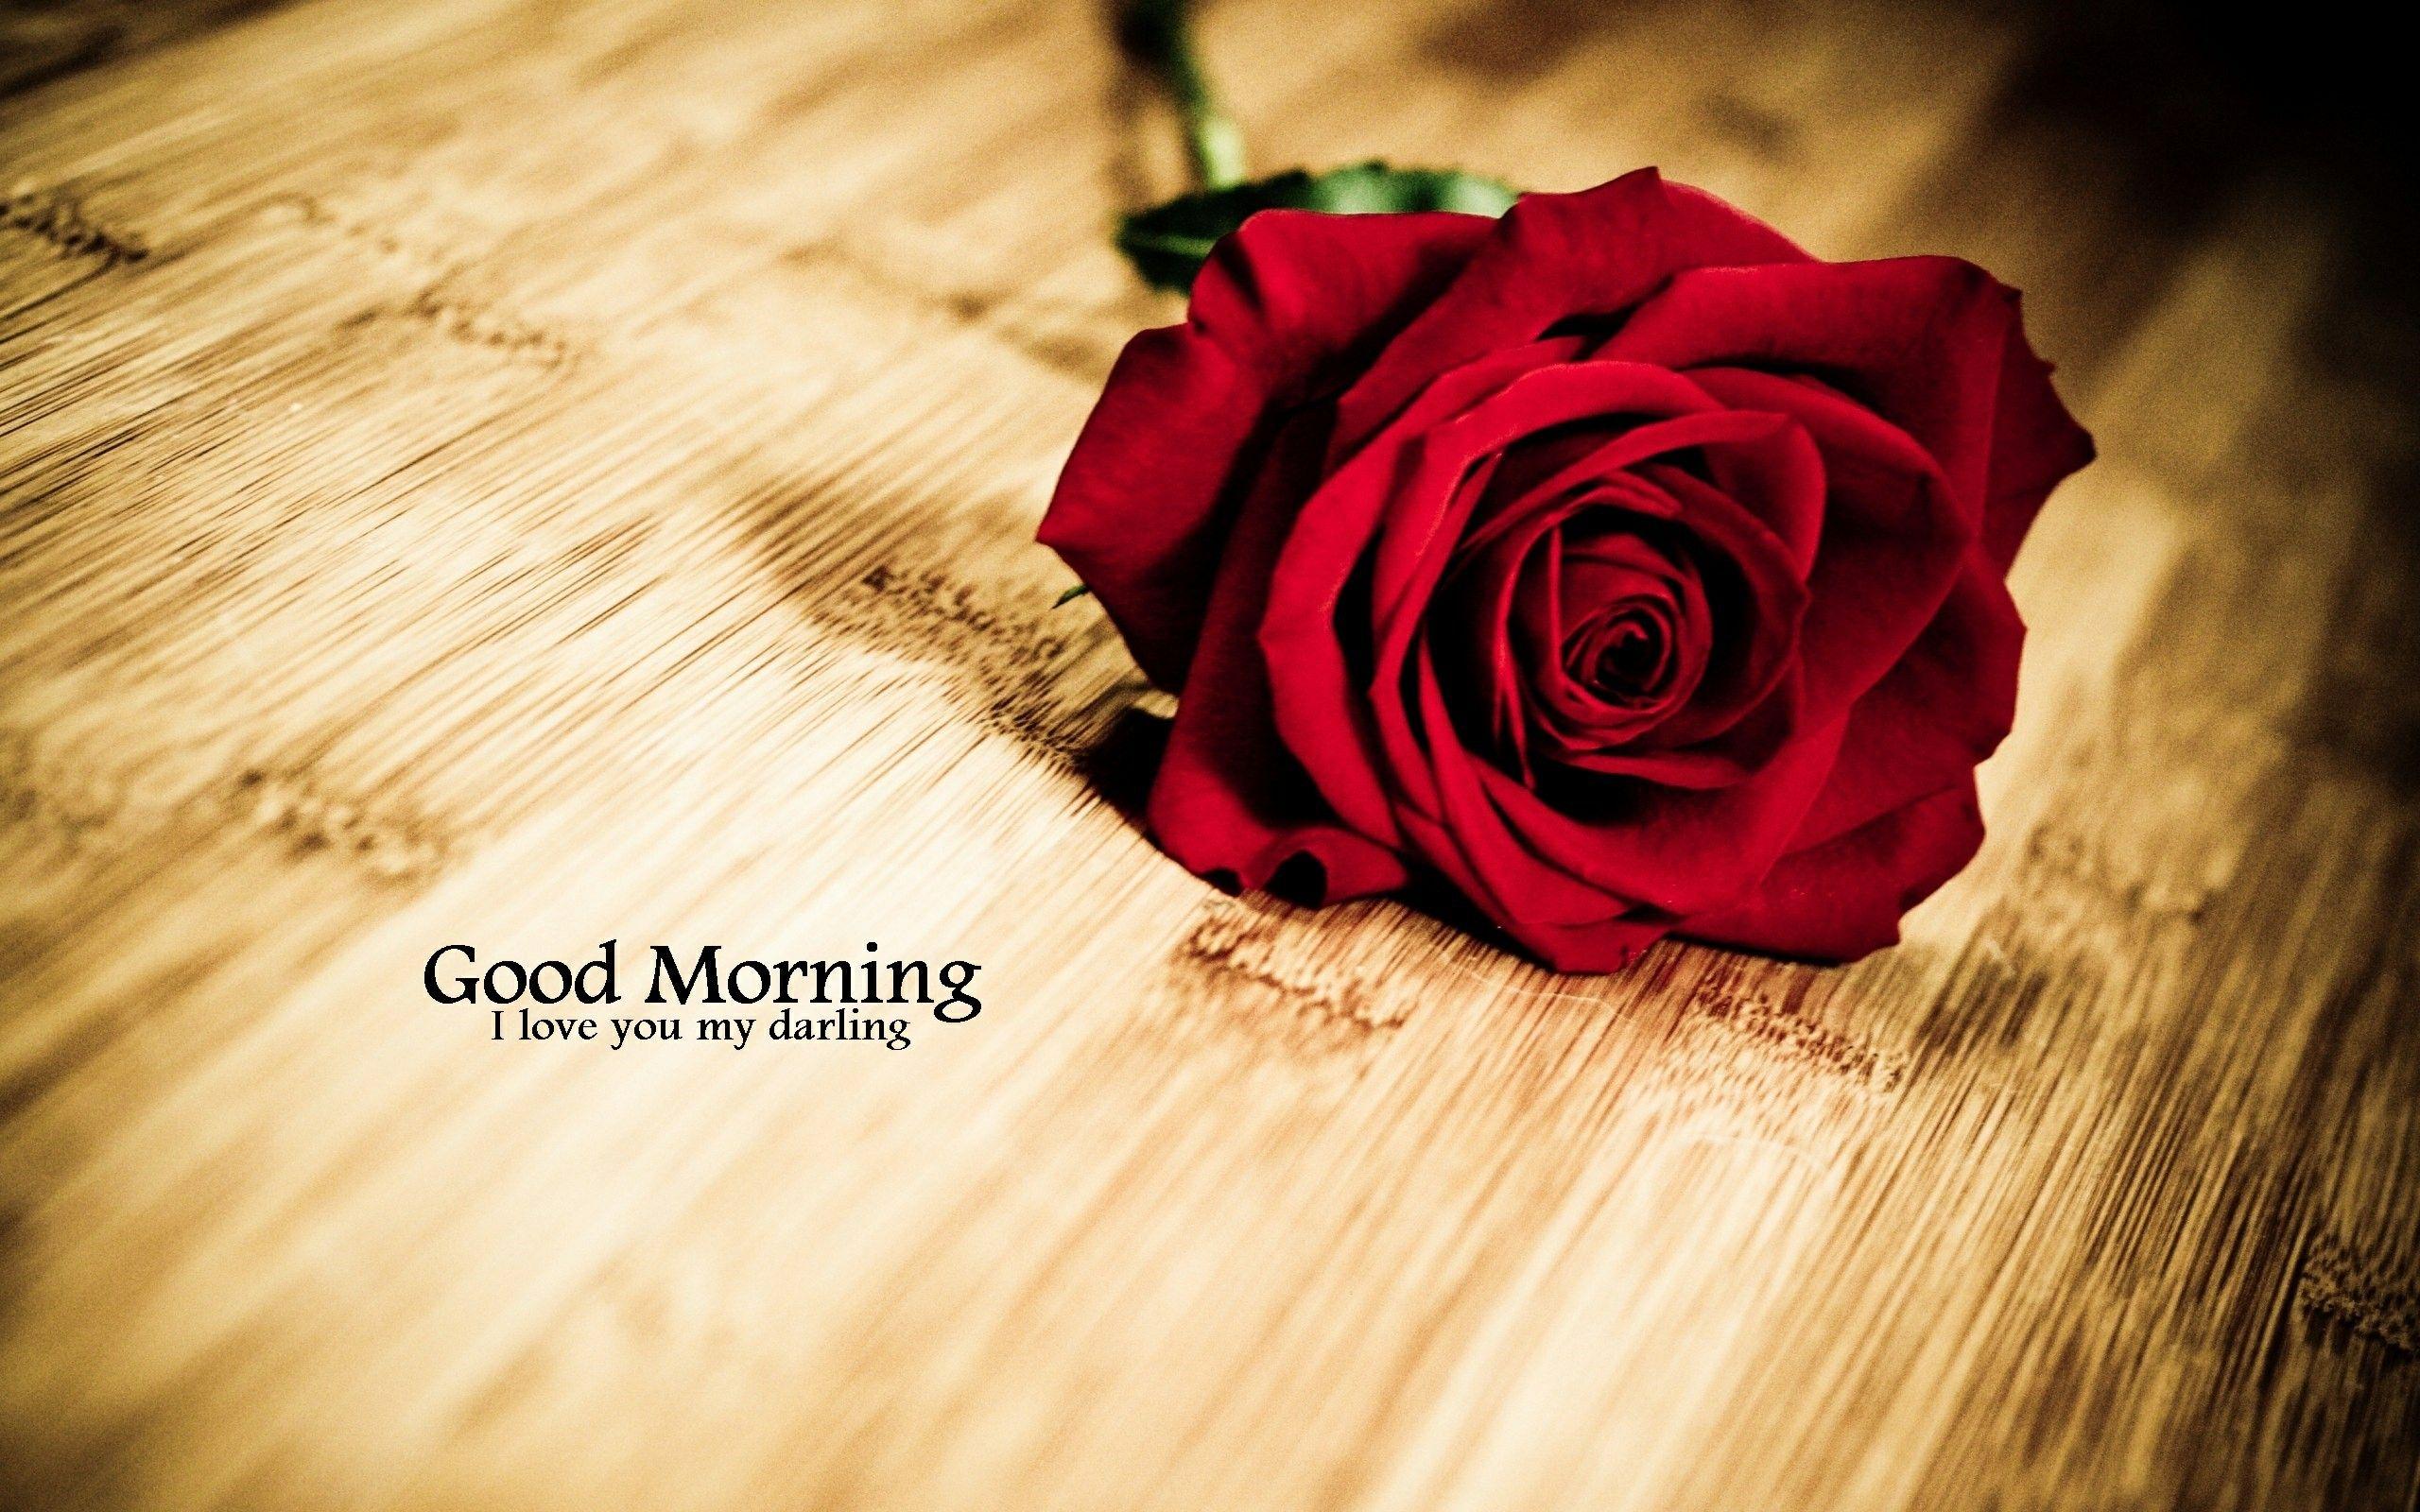 good morning love red roses